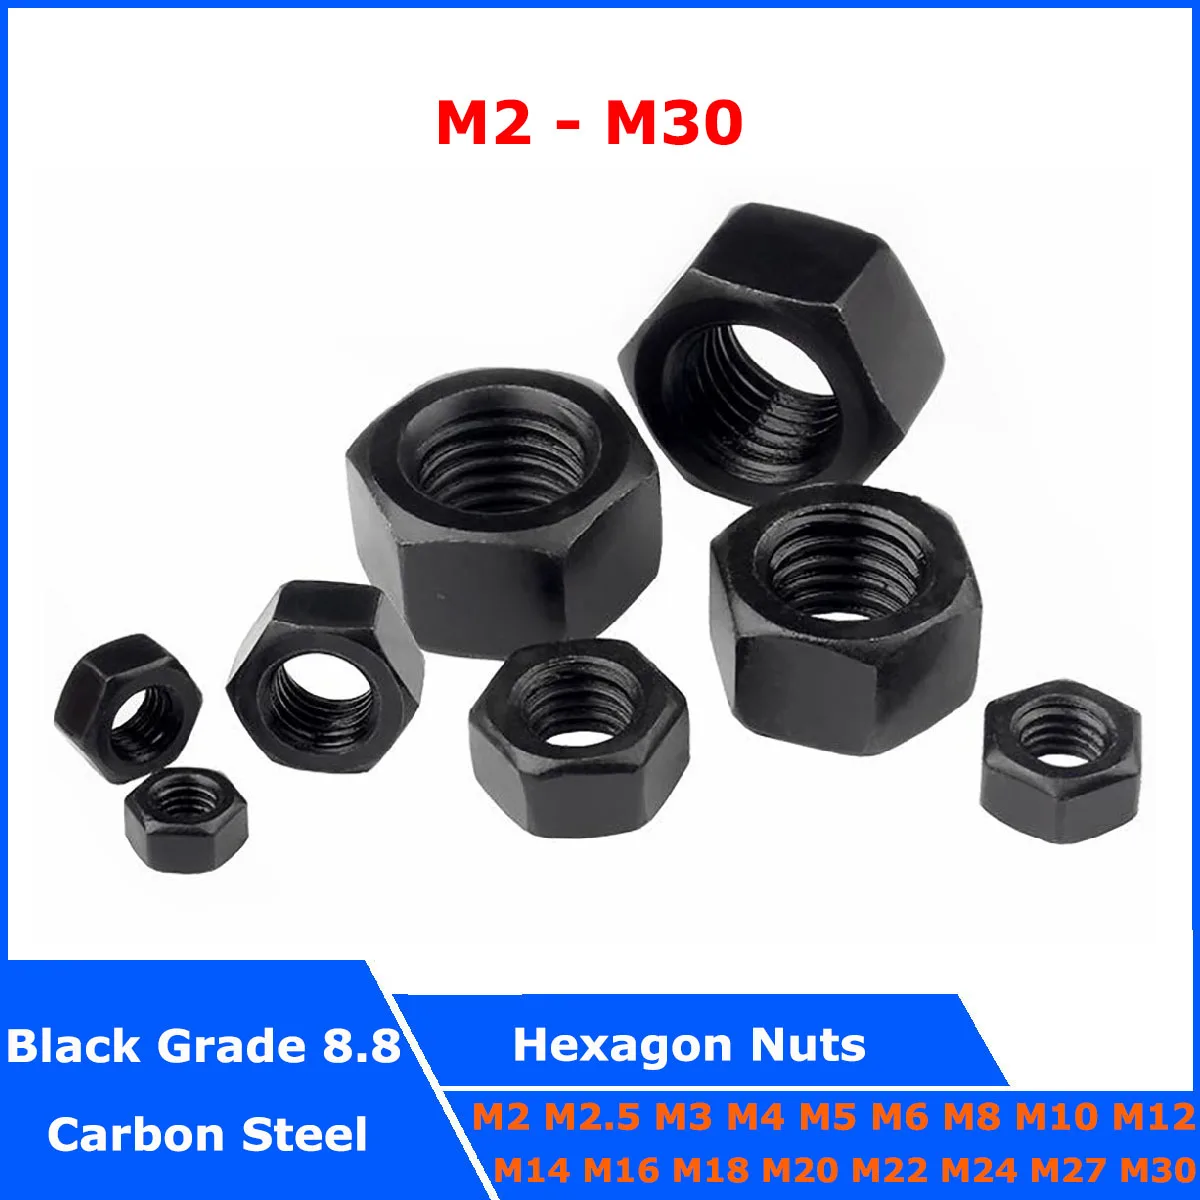 

Hexagon Nuts Black 8.8 Carbon Steel DIN934 Hex Full Nut M2 M2.5 M3 M4 M5 M6 M8 M10 M12 M14 M16 M18 M20 M22 M24 M27 M30